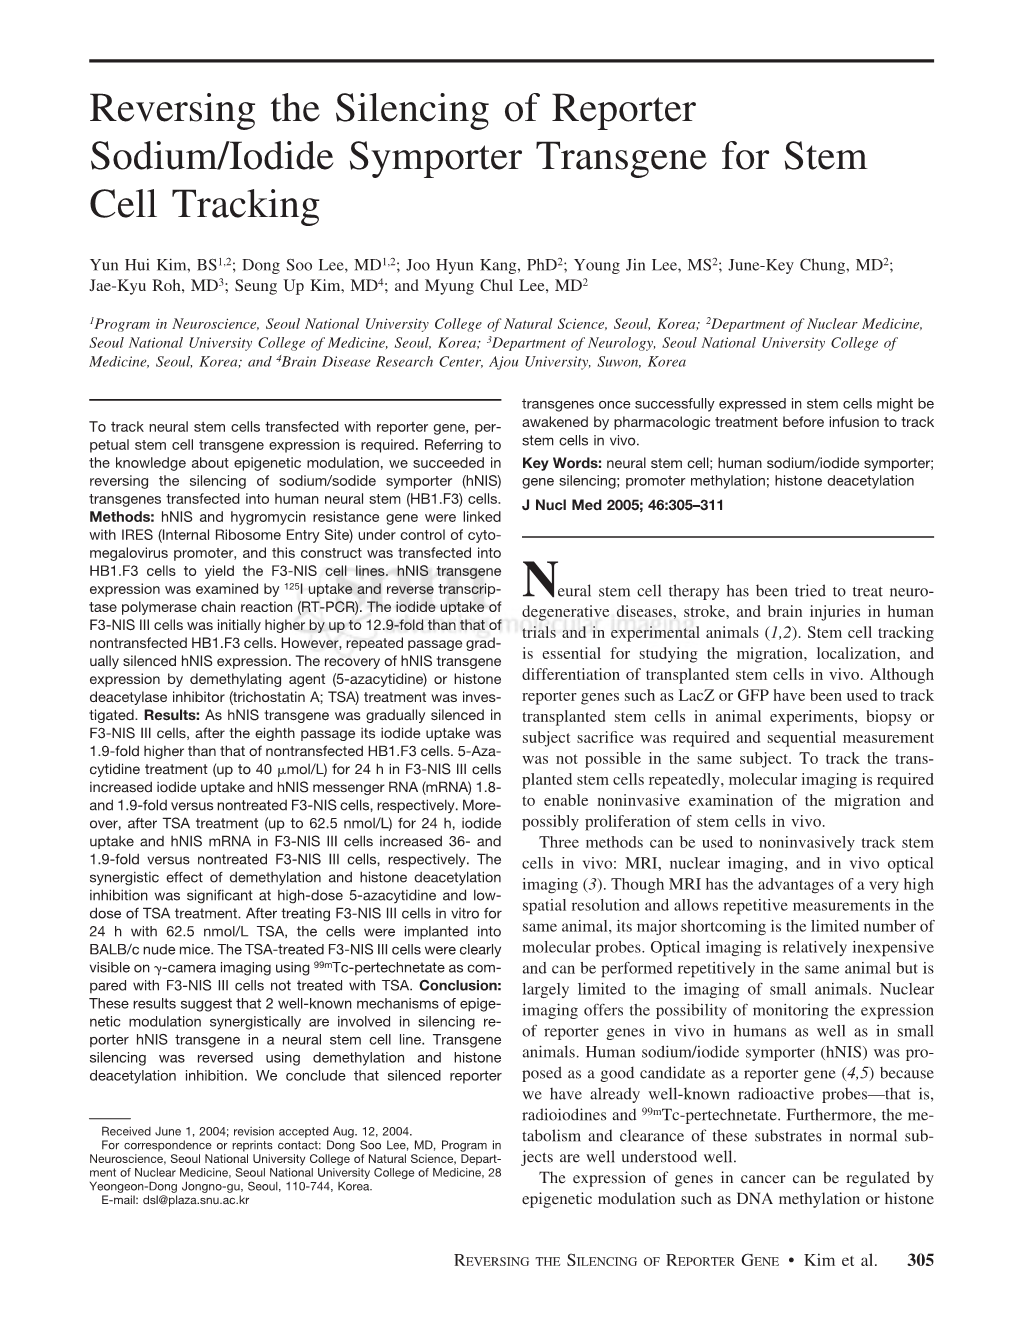 Reversing the Silencing of Reporter Sodium/Iodide Symporter Transgene for Stem Cell Tracking